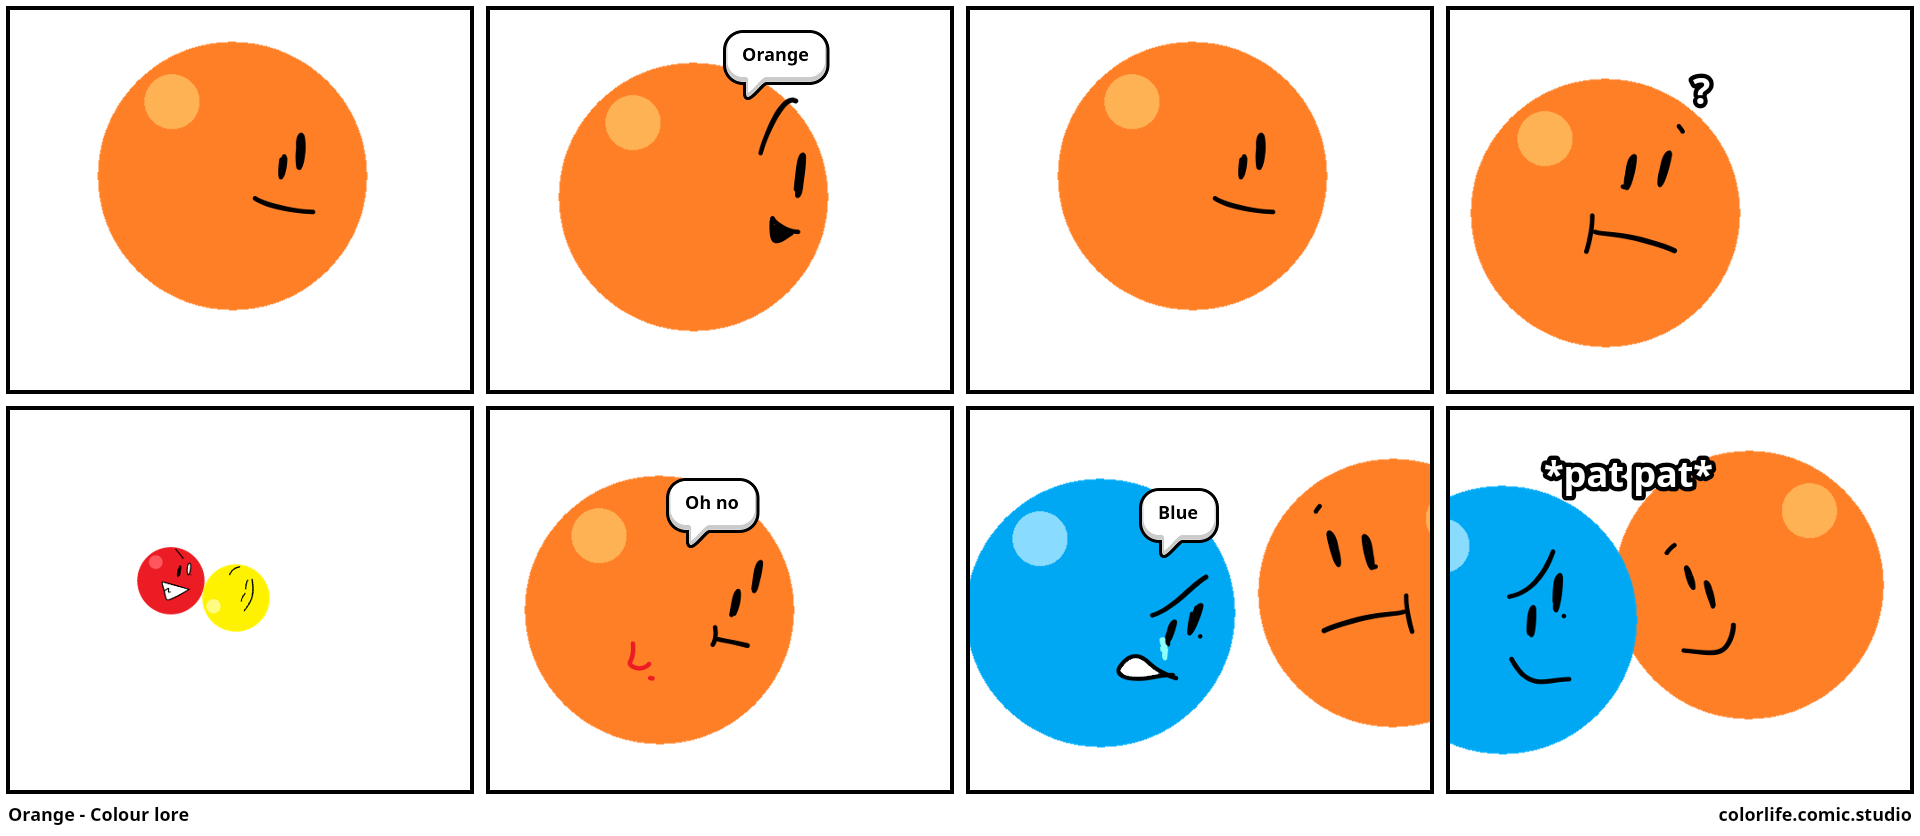 Orange - Colour lore